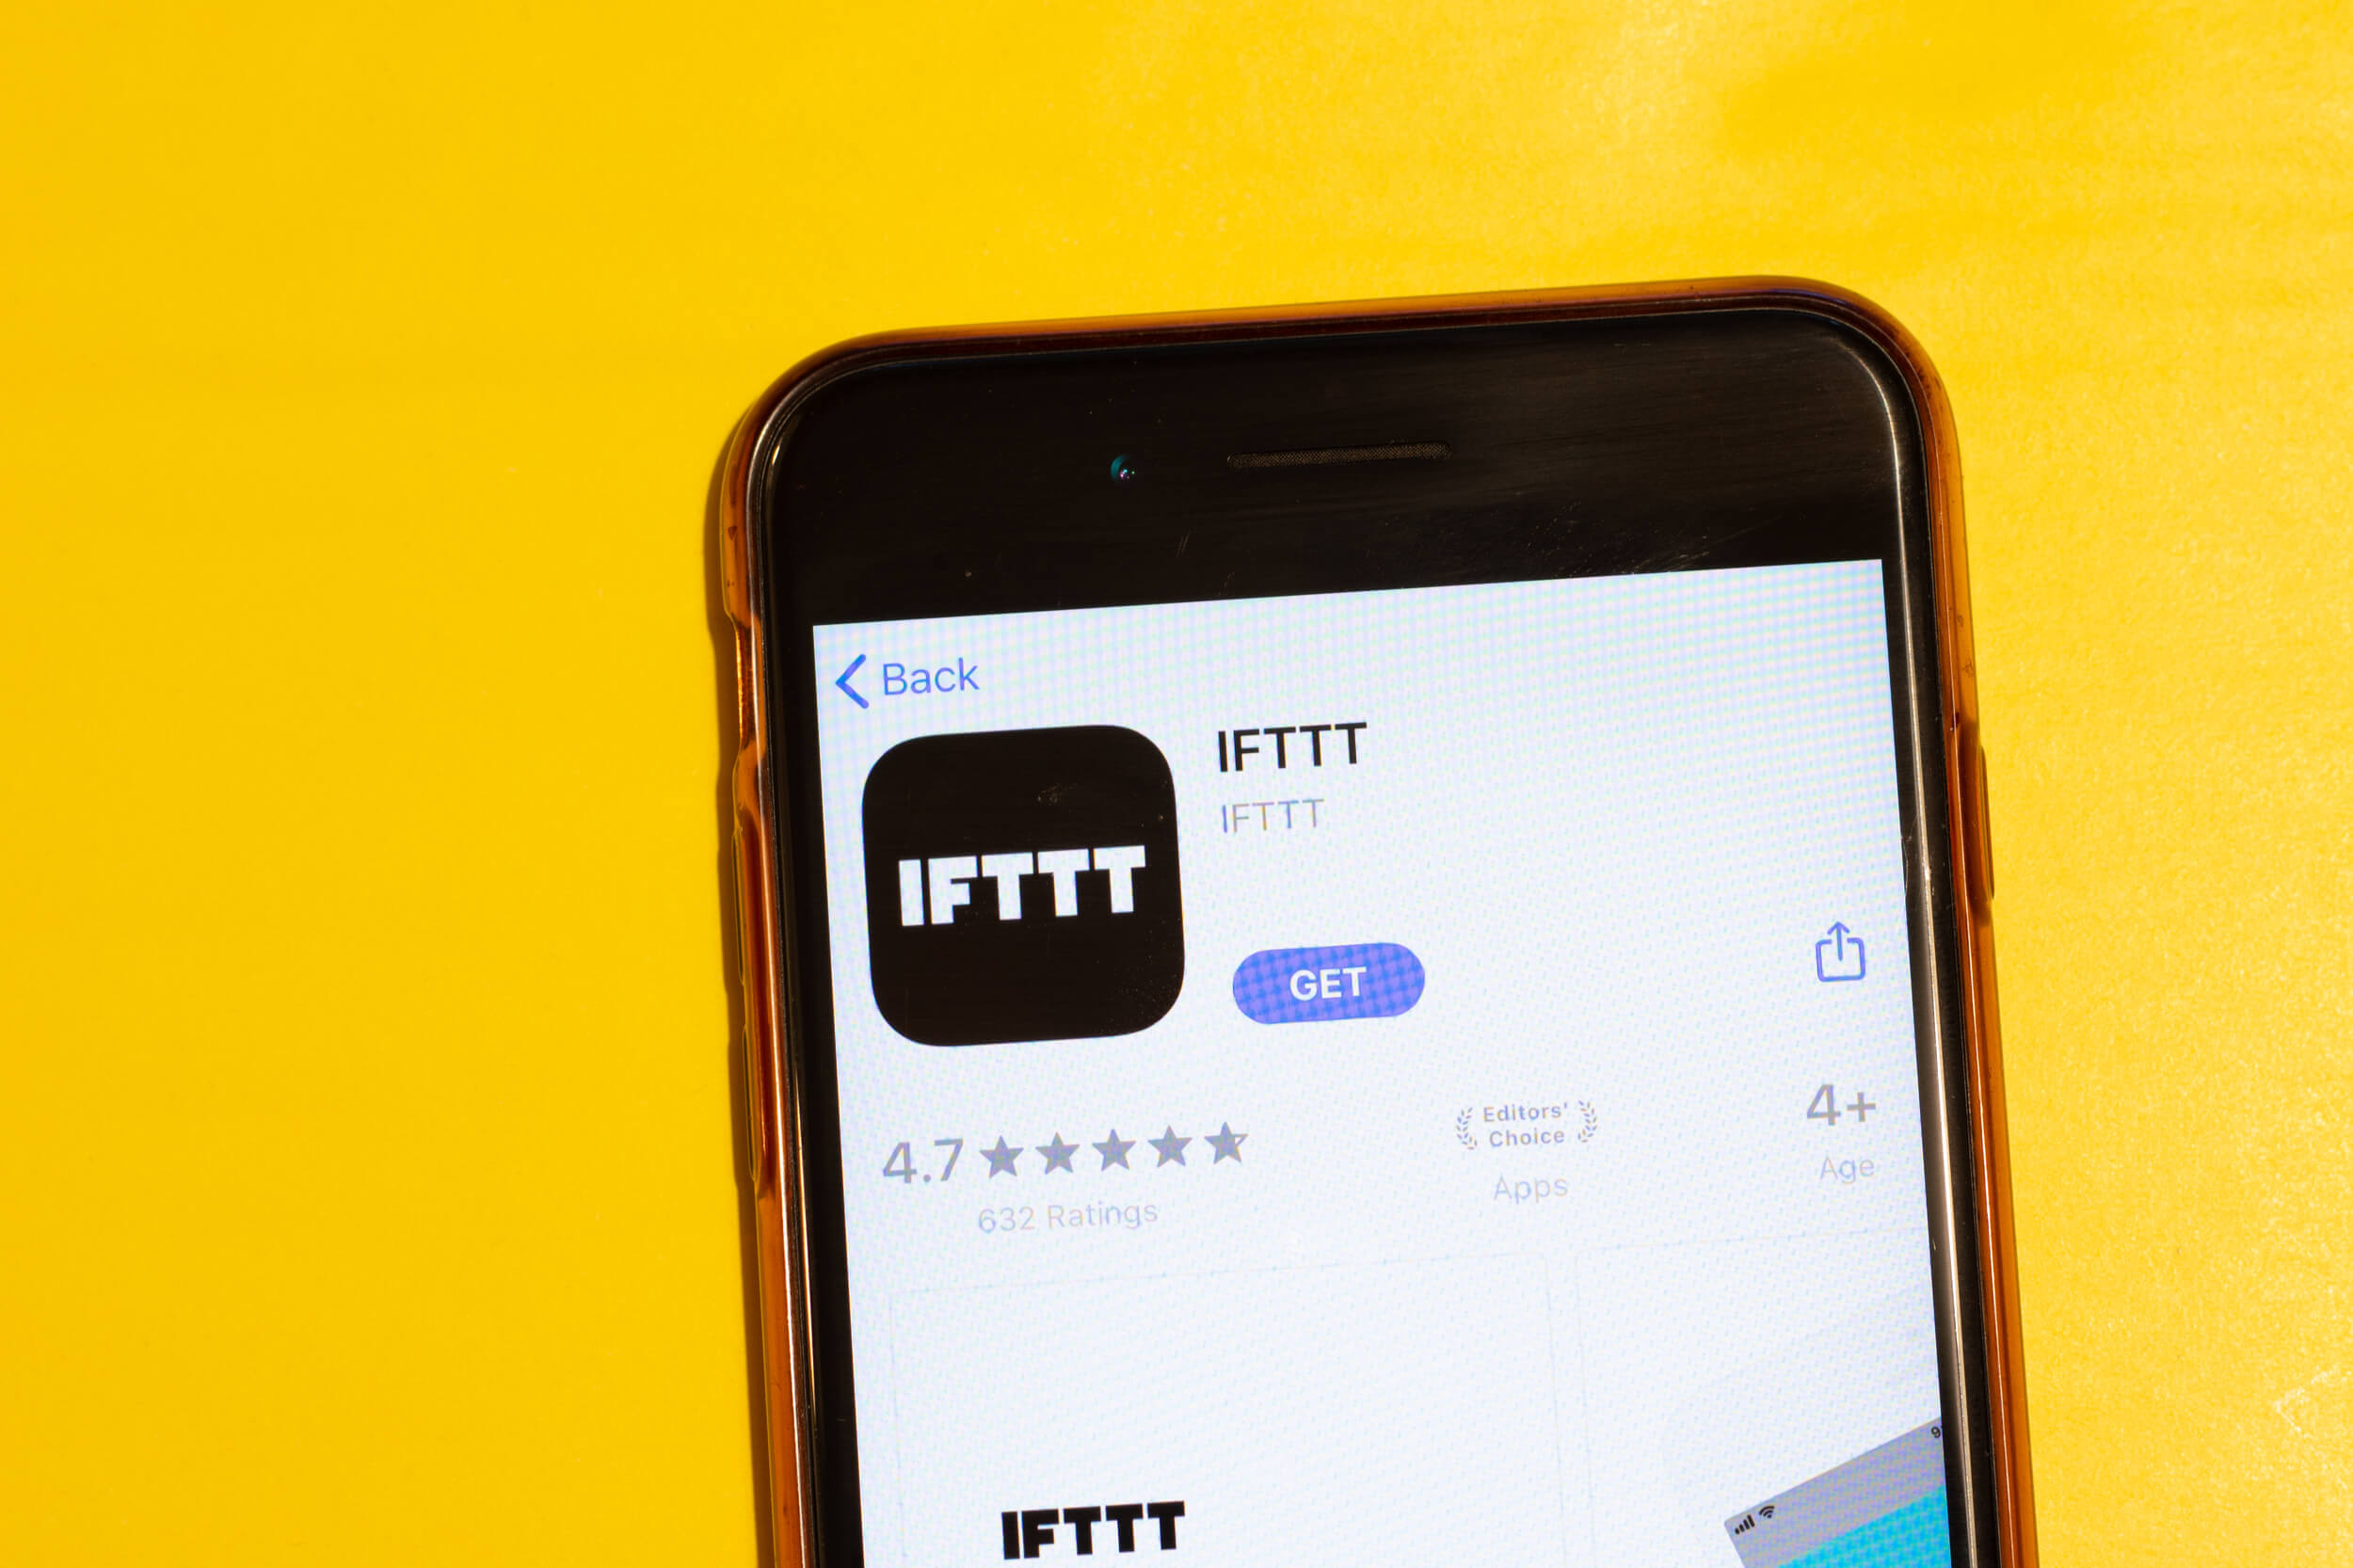 IFTTT app icon on phone screen, Illustrative Editorial